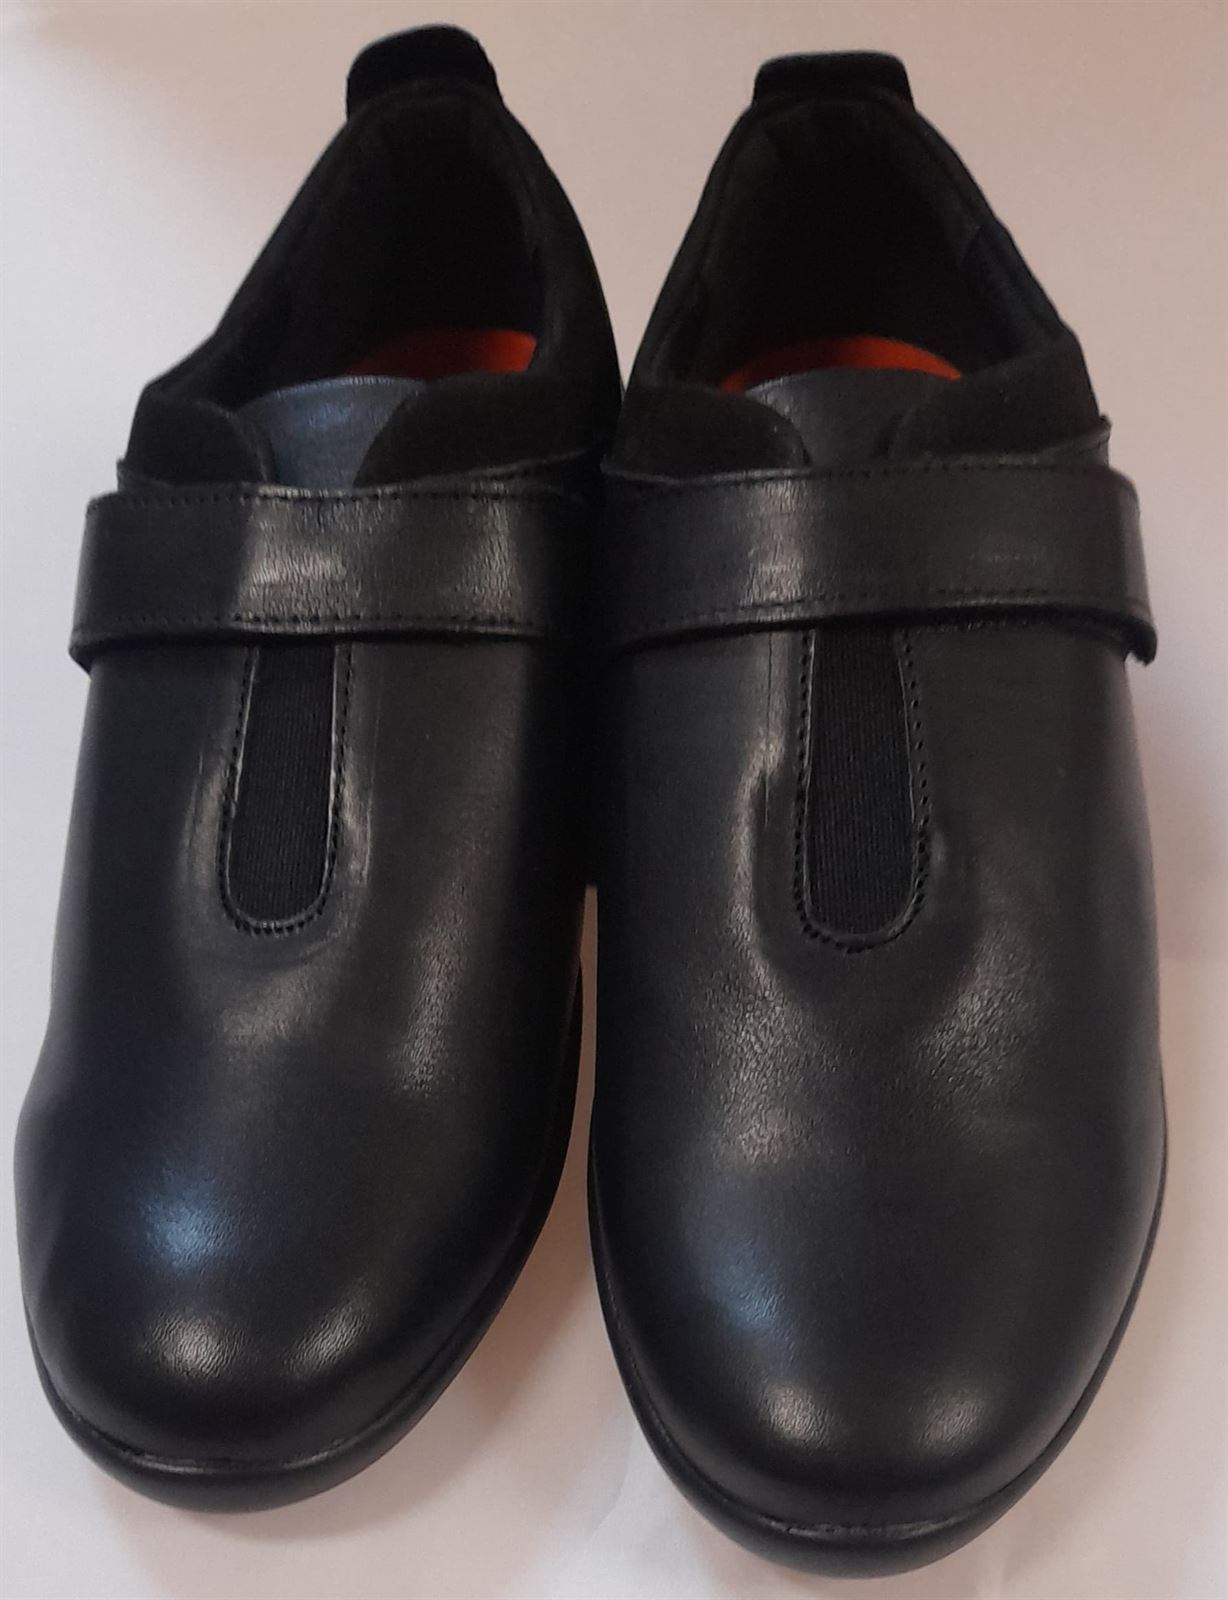 Zapato Iguacu Negro - Imagen 1